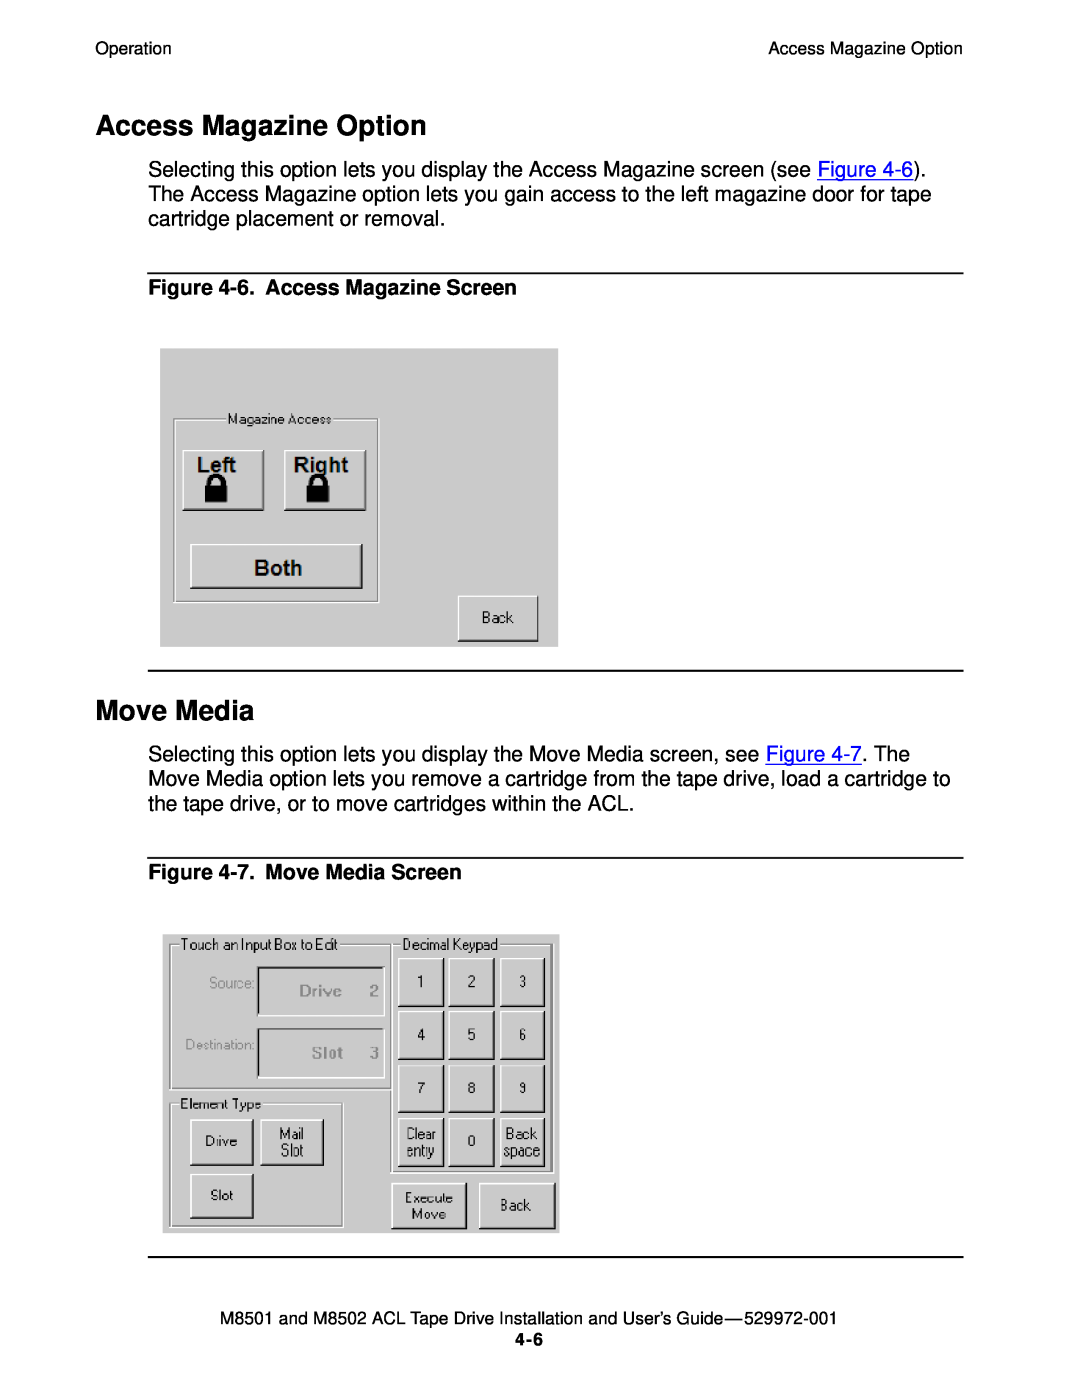 SMC Networks M8501 manual Access Magazine Option, 6. Access Magazine Screen, 7. Move Media Screen 